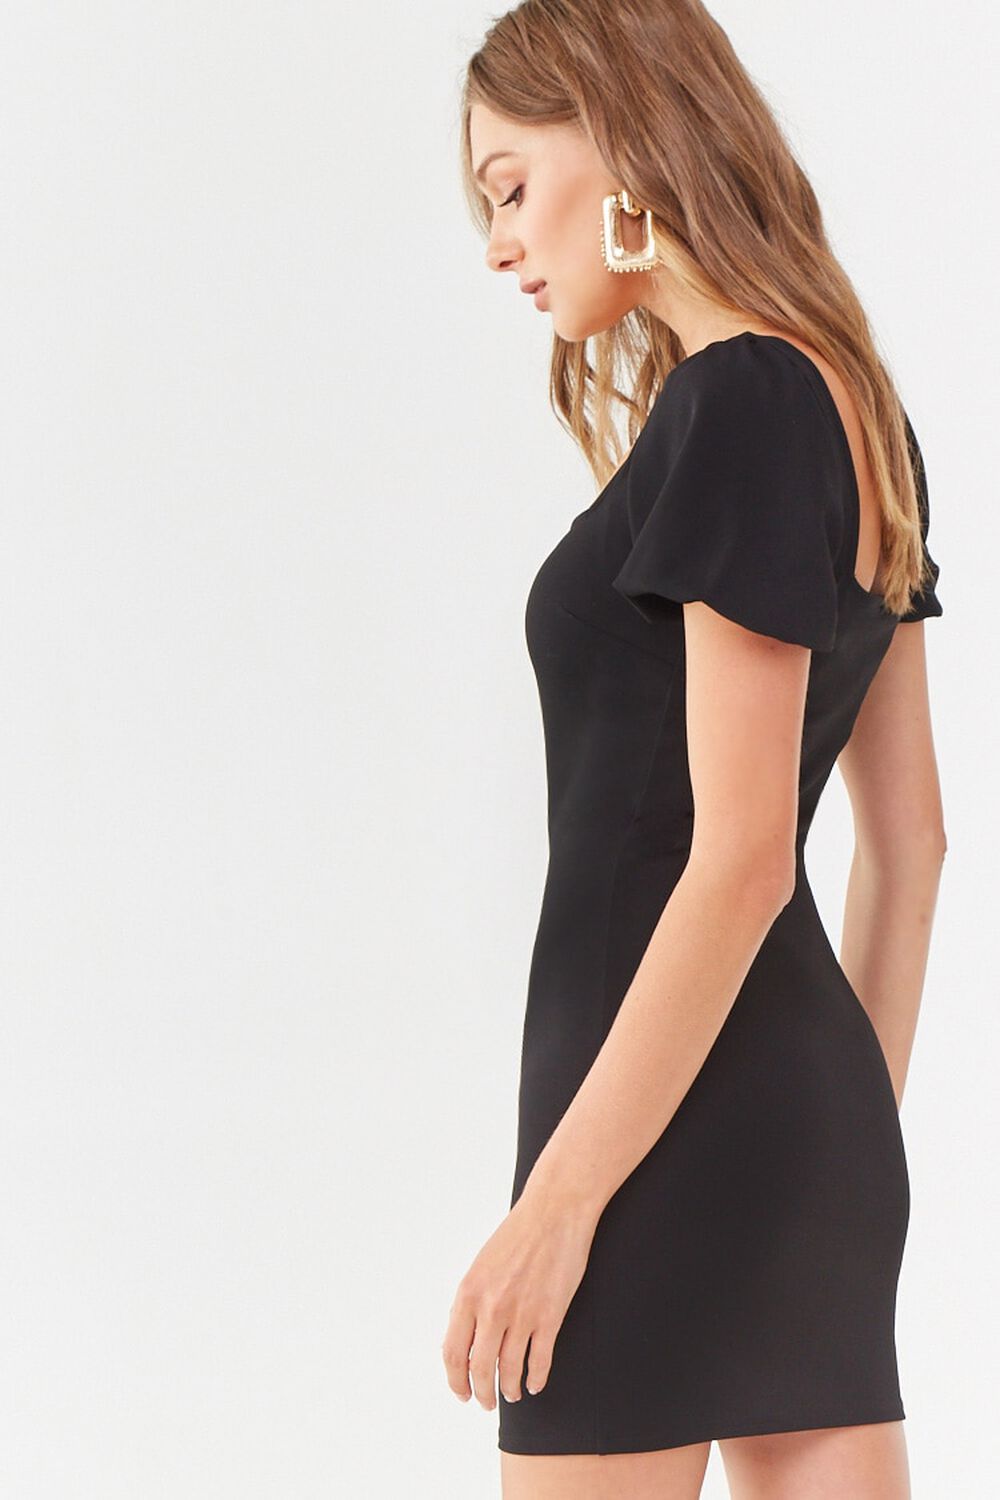 BLACK Puff-Sleeve Bodycon Dress, image 2